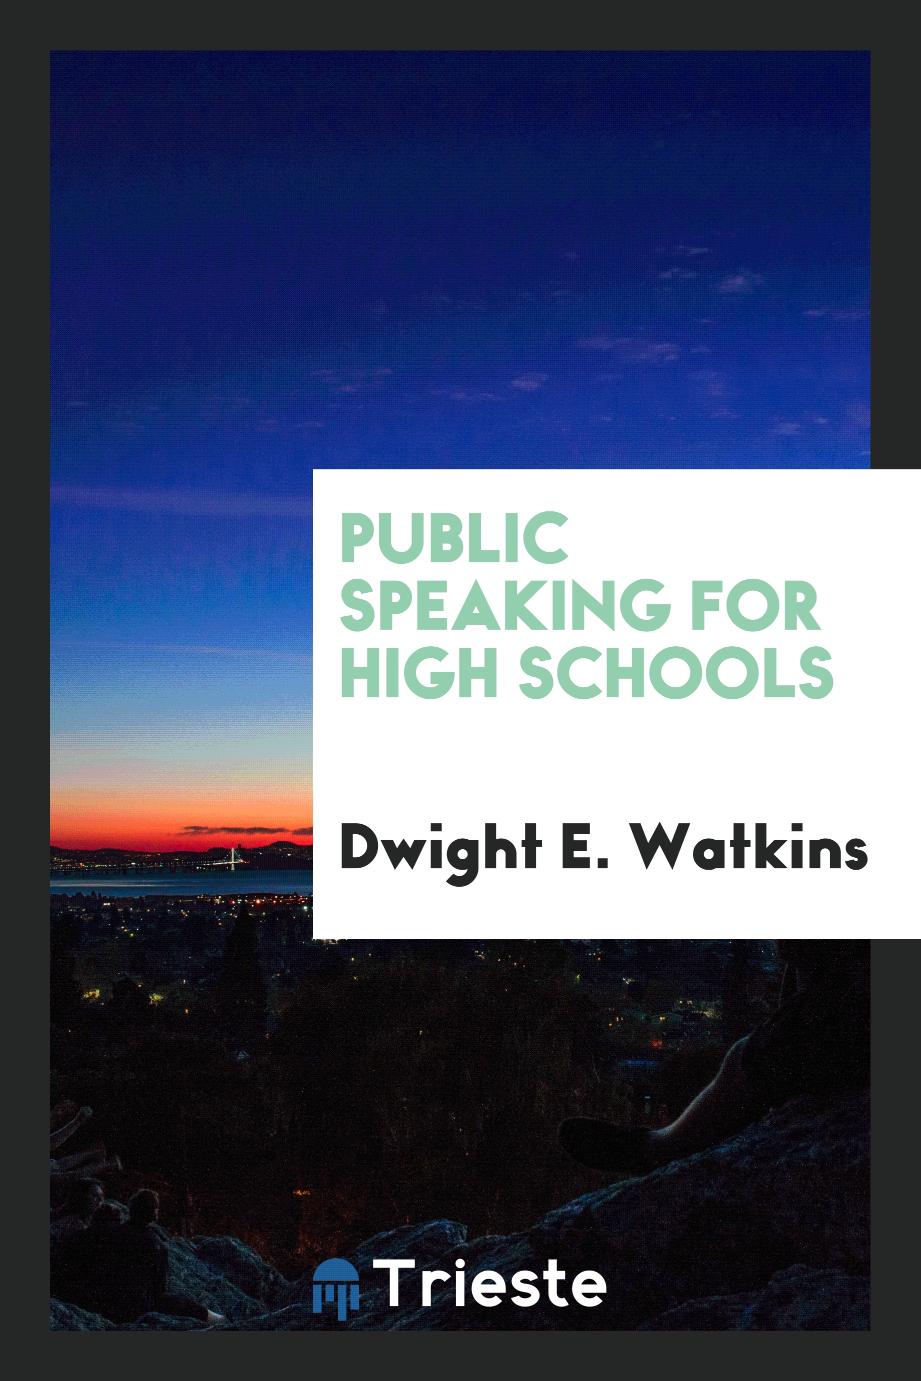 Public Speaking for High Schools